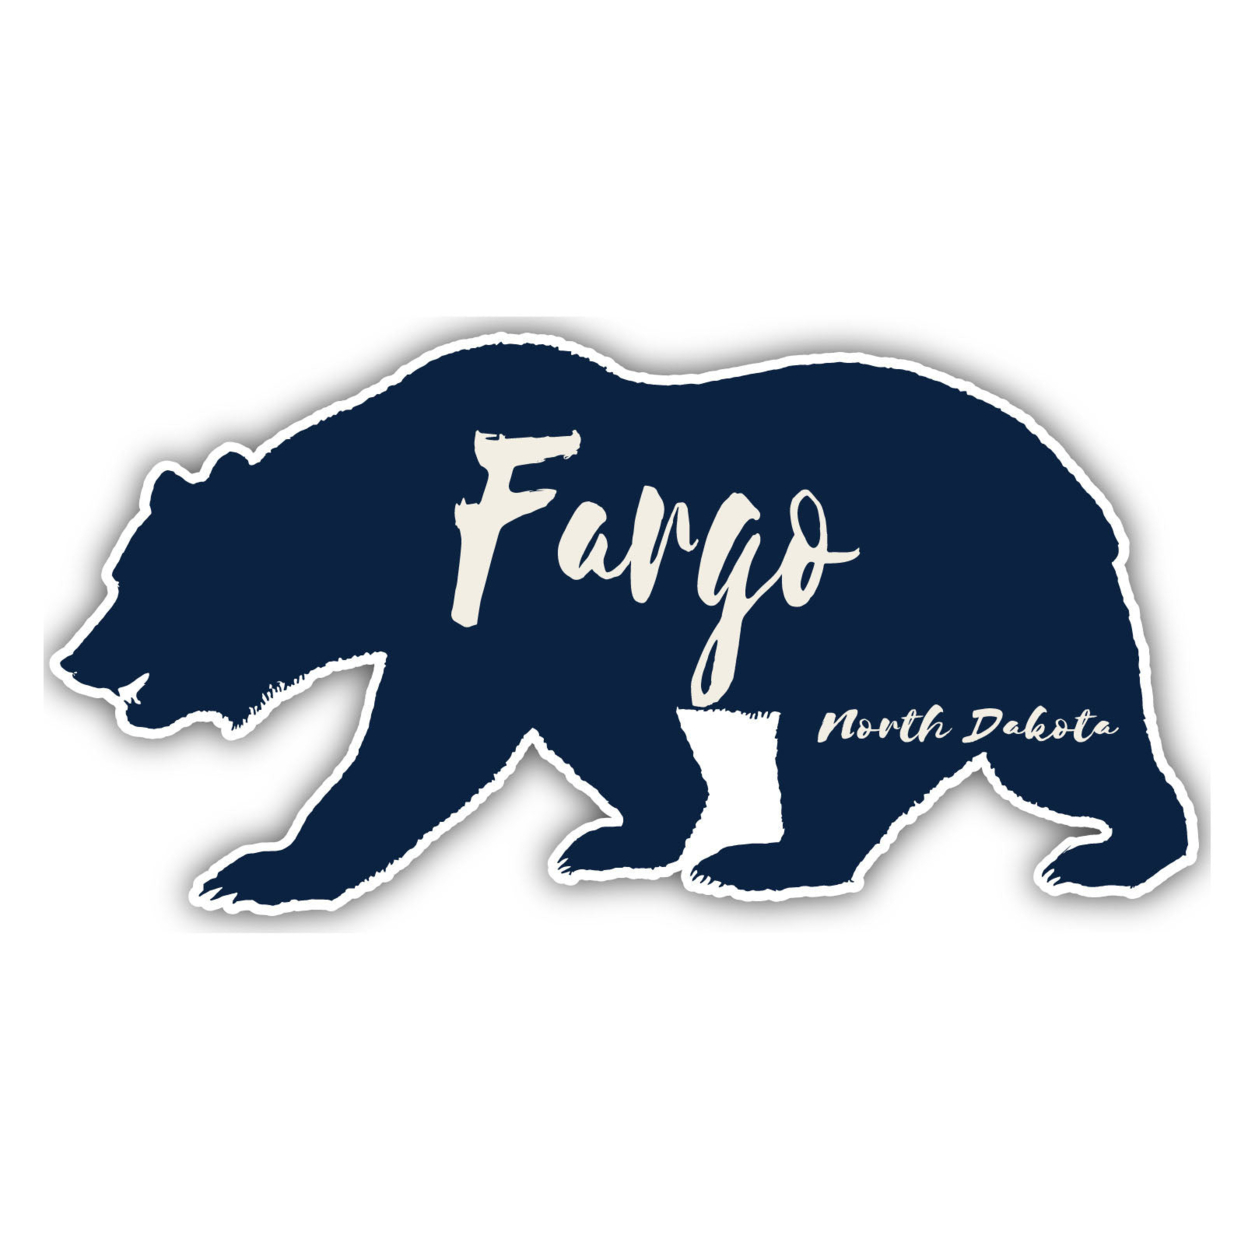 Fargo North Dakota Souvenir Decorative Stickers (Choose Theme And Size) - Single Unit, 8-Inch, Tent